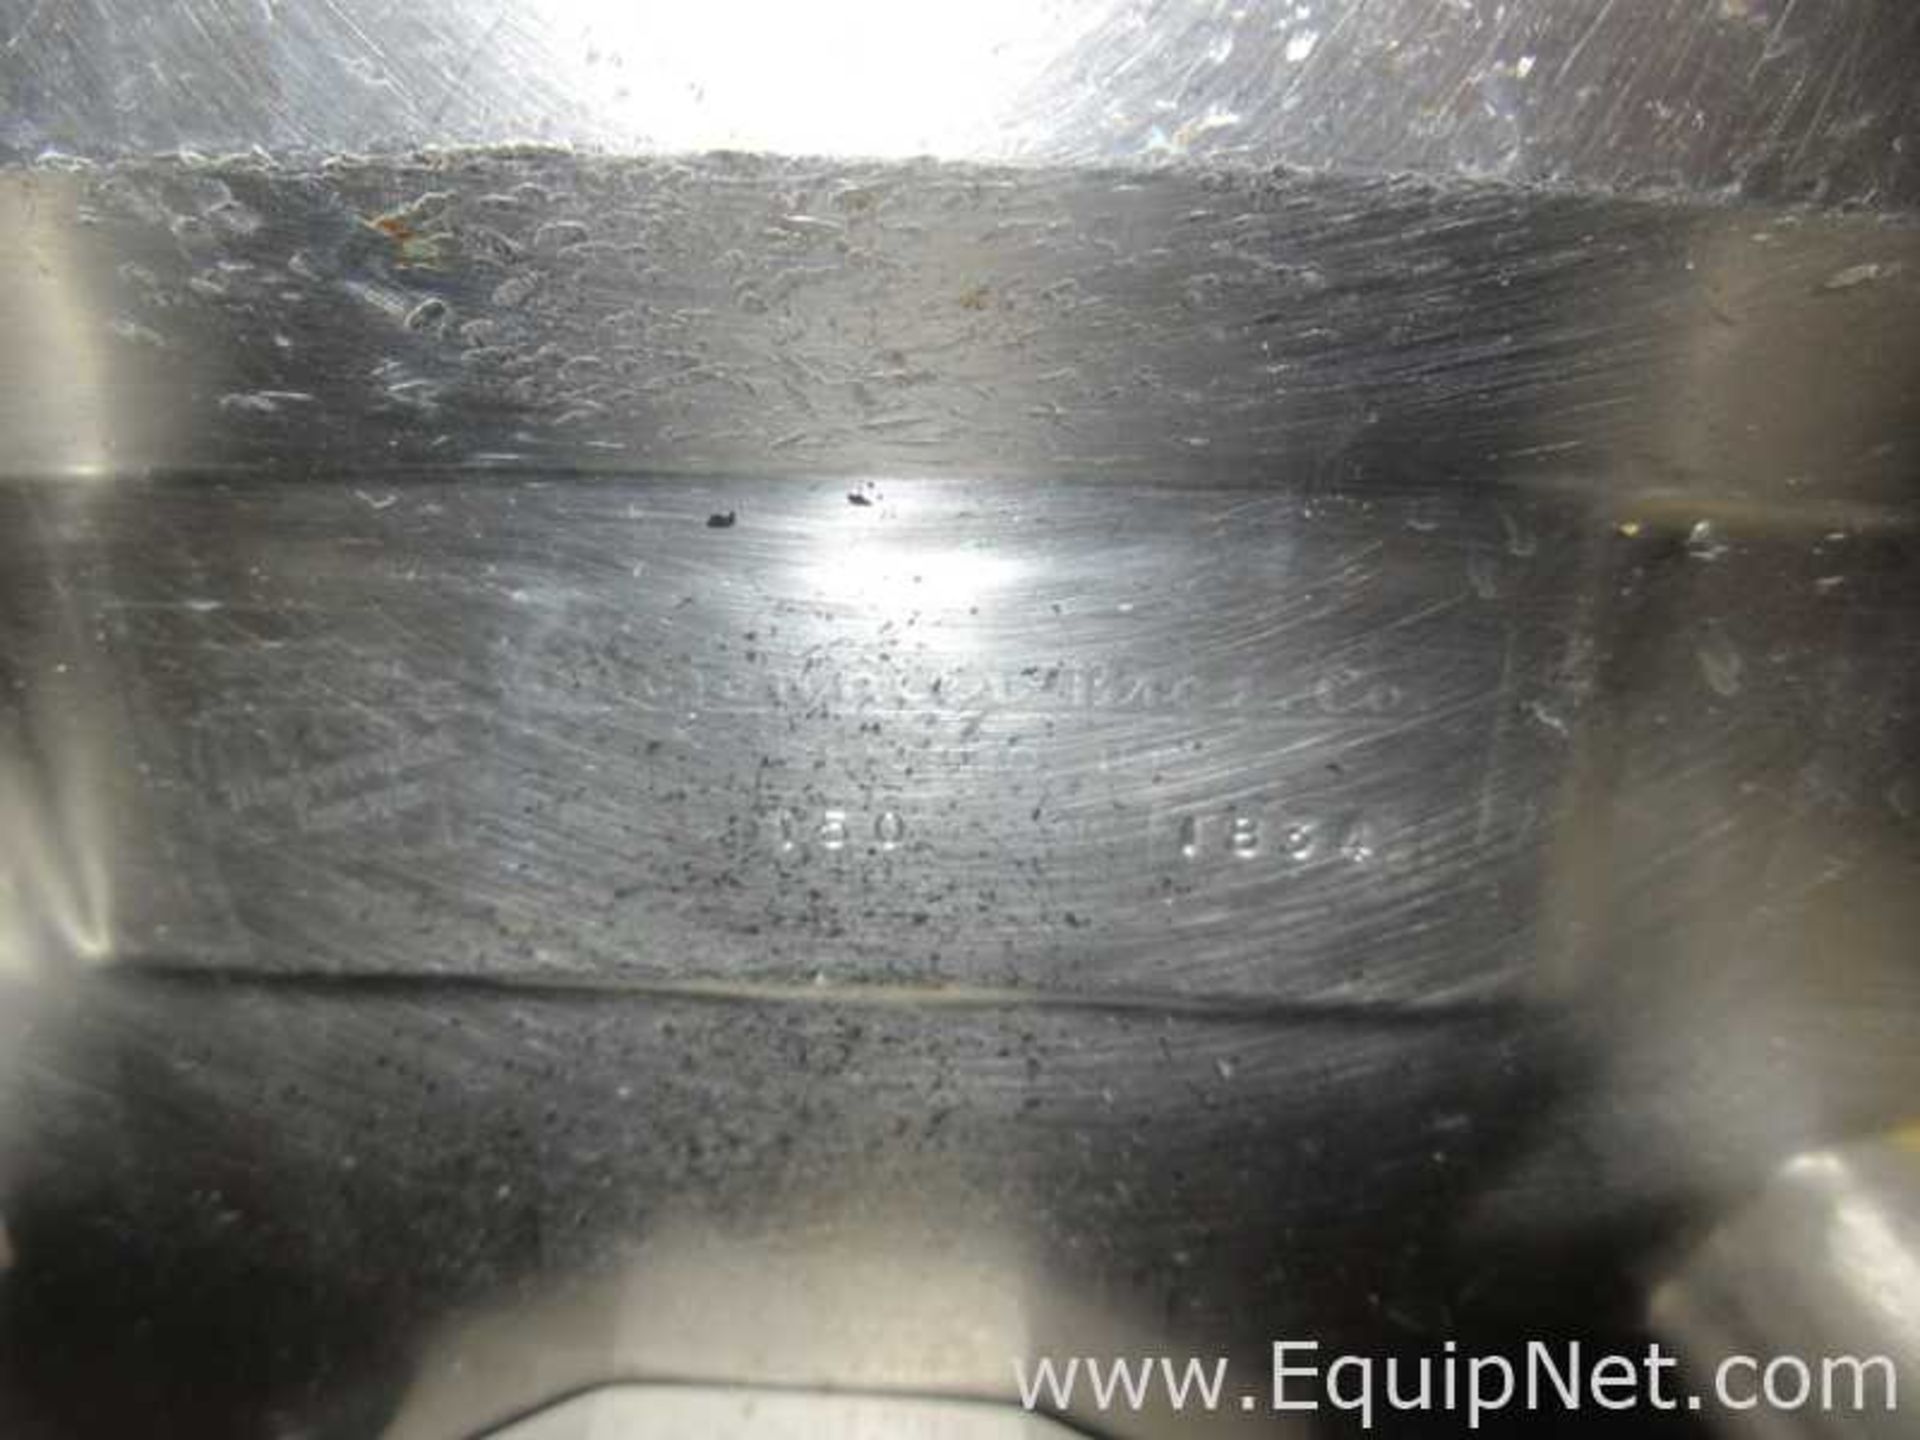 150 Gallon Stainless Steel Mojonnier Kettle With 3 HP Agitator - Image 5 of 14